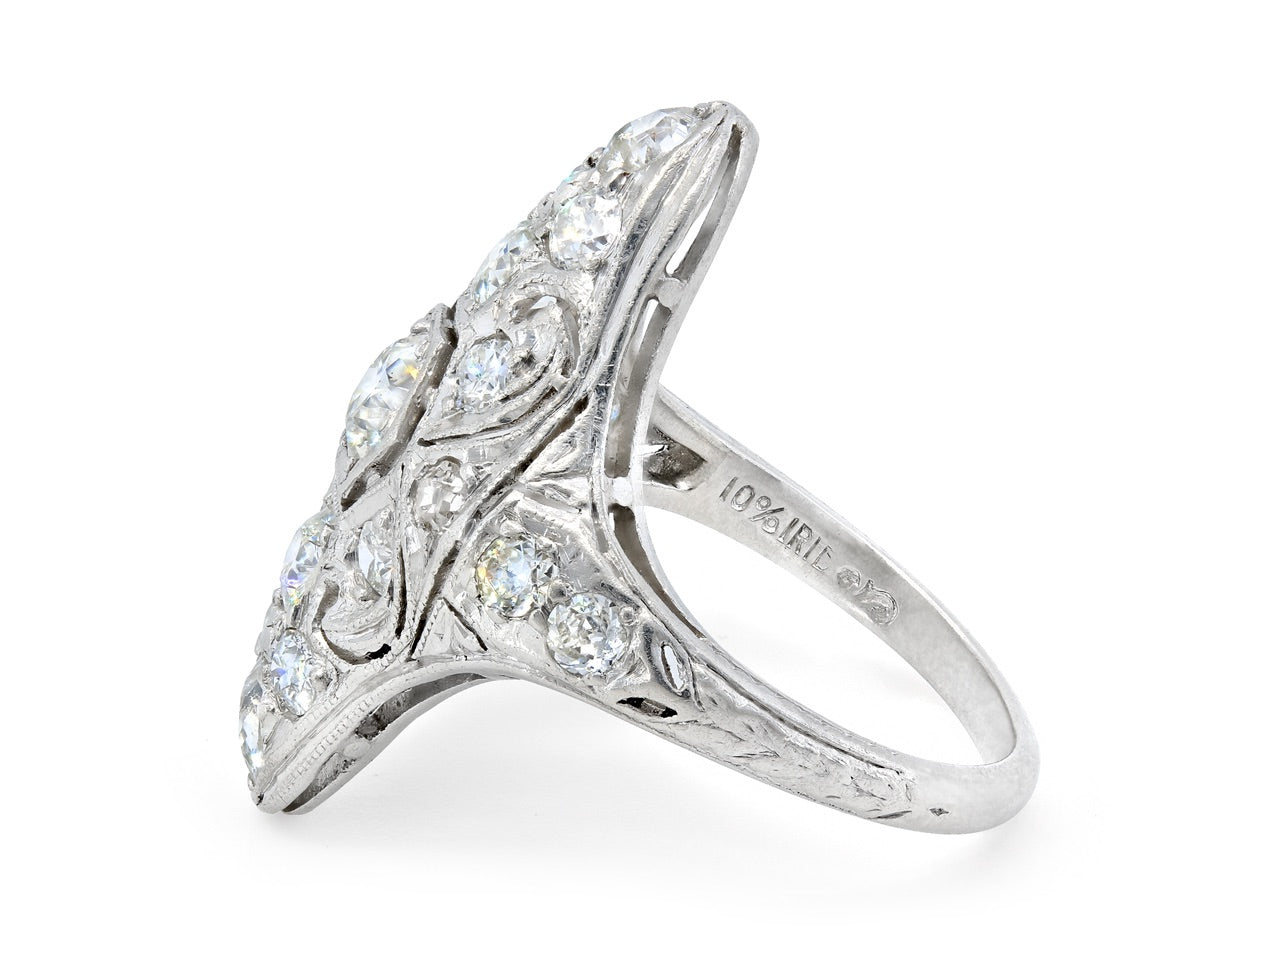 Antique Edwardian Diamond Filigree Ring in Platinum